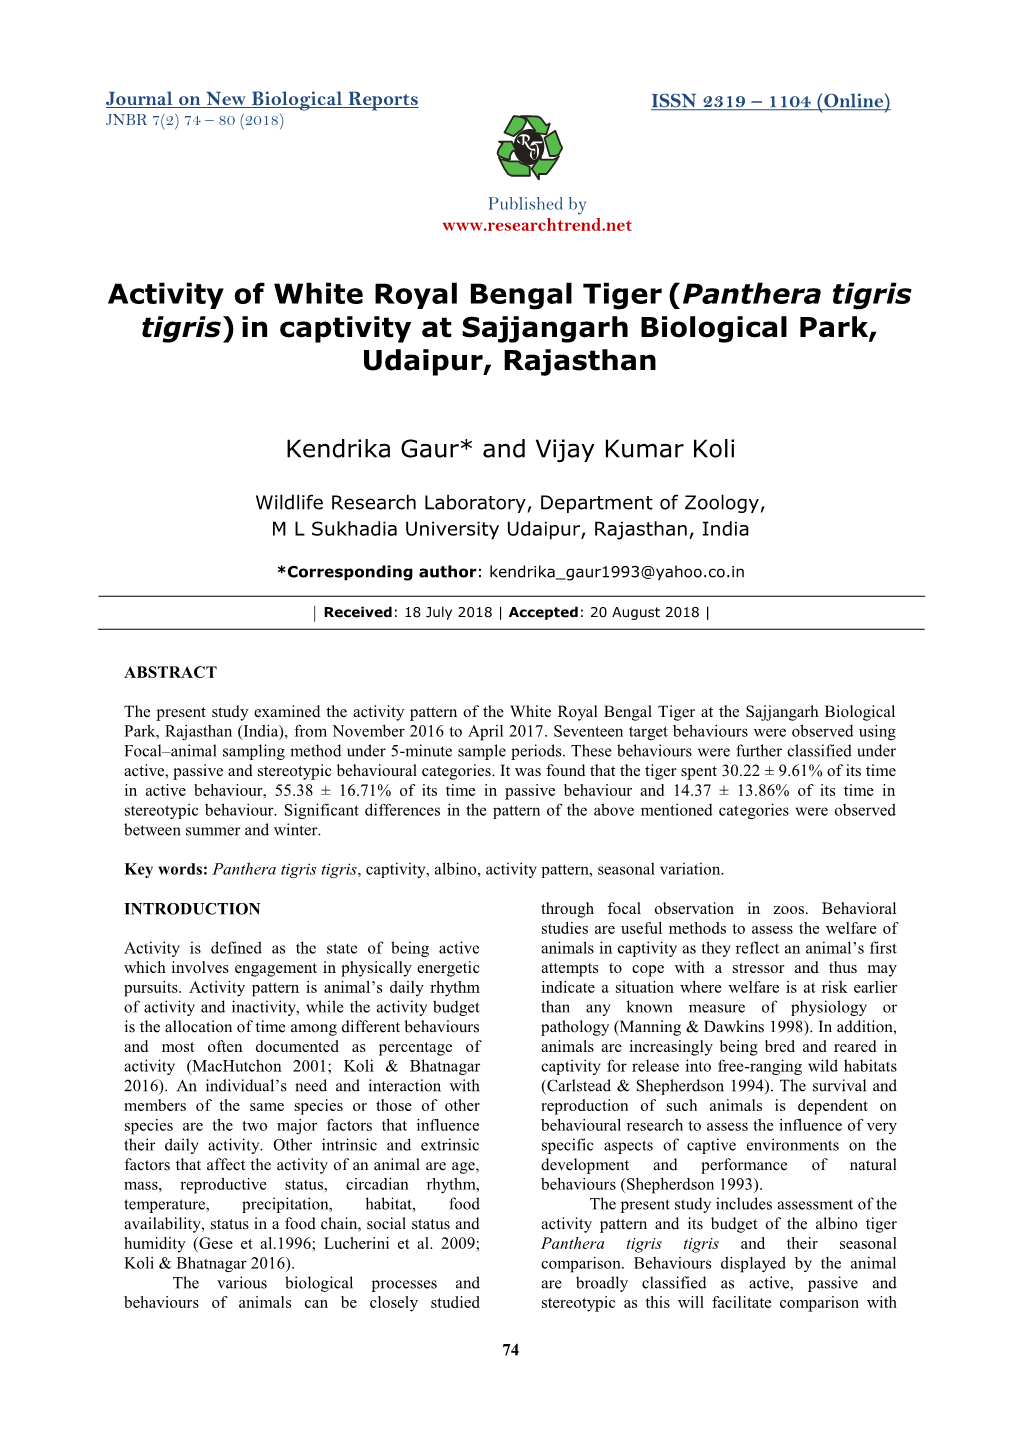 Activity of White Royal Bengal Tiger (Panthera Tigris Tigris) in Captivity at Sajjangarh Biological Park, Udaipur, Rajasthan